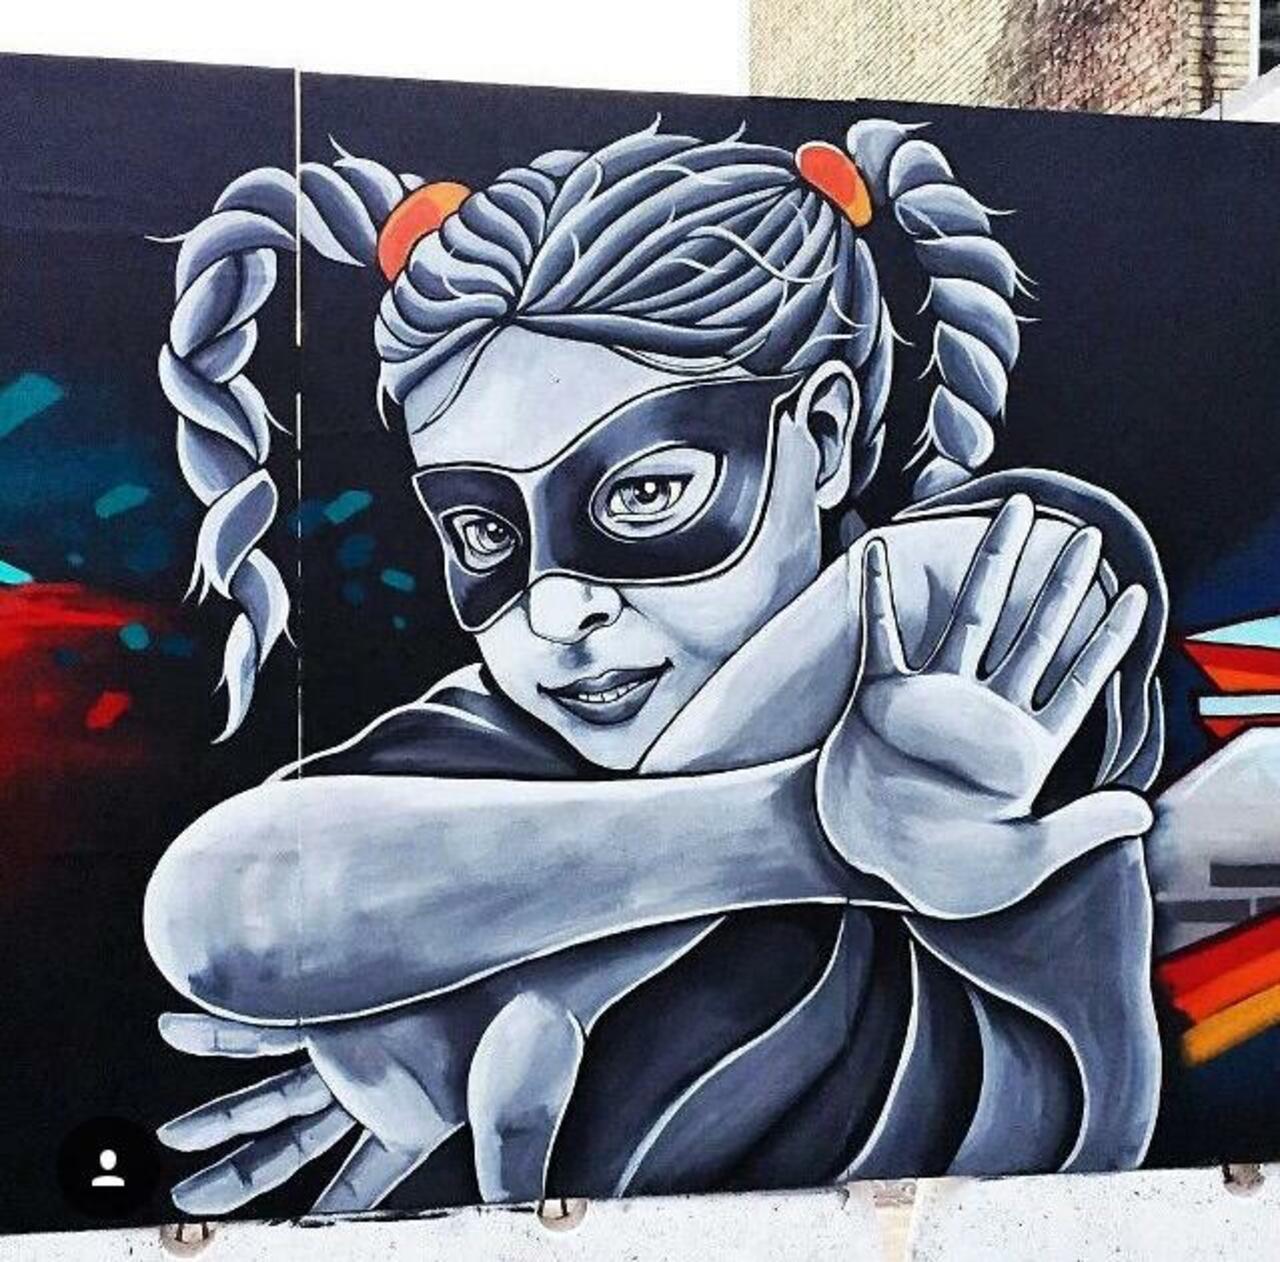 RT belilac "Street Art by Stinehvid 

#art #graffiti #mural #streetart http://t.co/HgV0qG5l1Y"